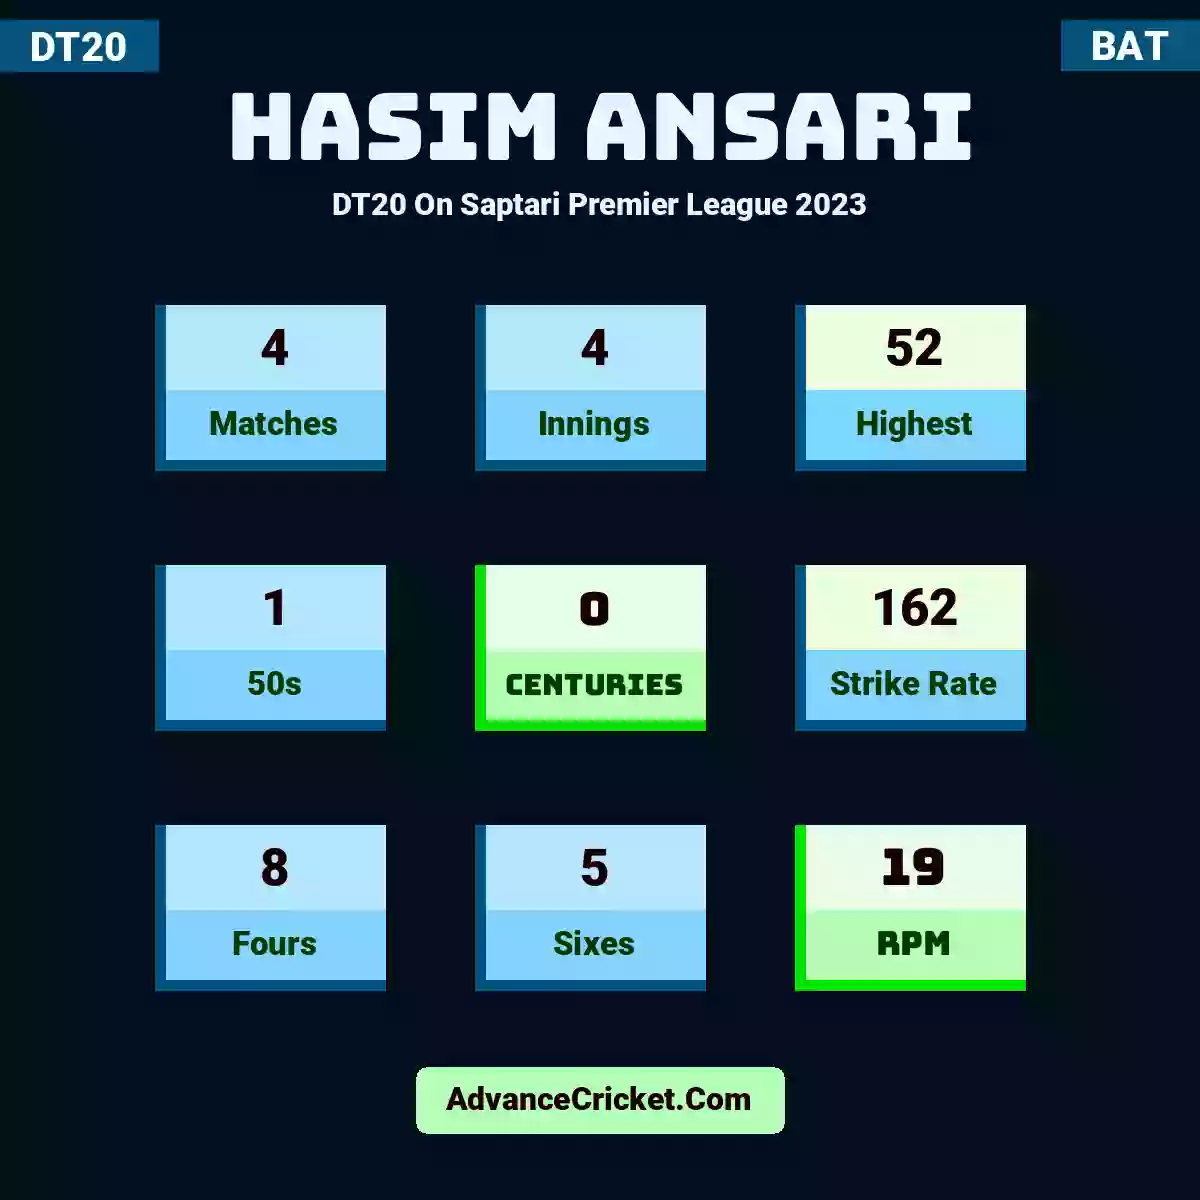 Hasim Ansari DT20  On Saptari Premier League 2023, Hasim Ansari played 4 matches, scored 52 runs as highest, 1 half-centuries, and 0 centuries, with a strike rate of 162. H.Ansari hit 8 fours and 5 sixes, with an RPM of 19.